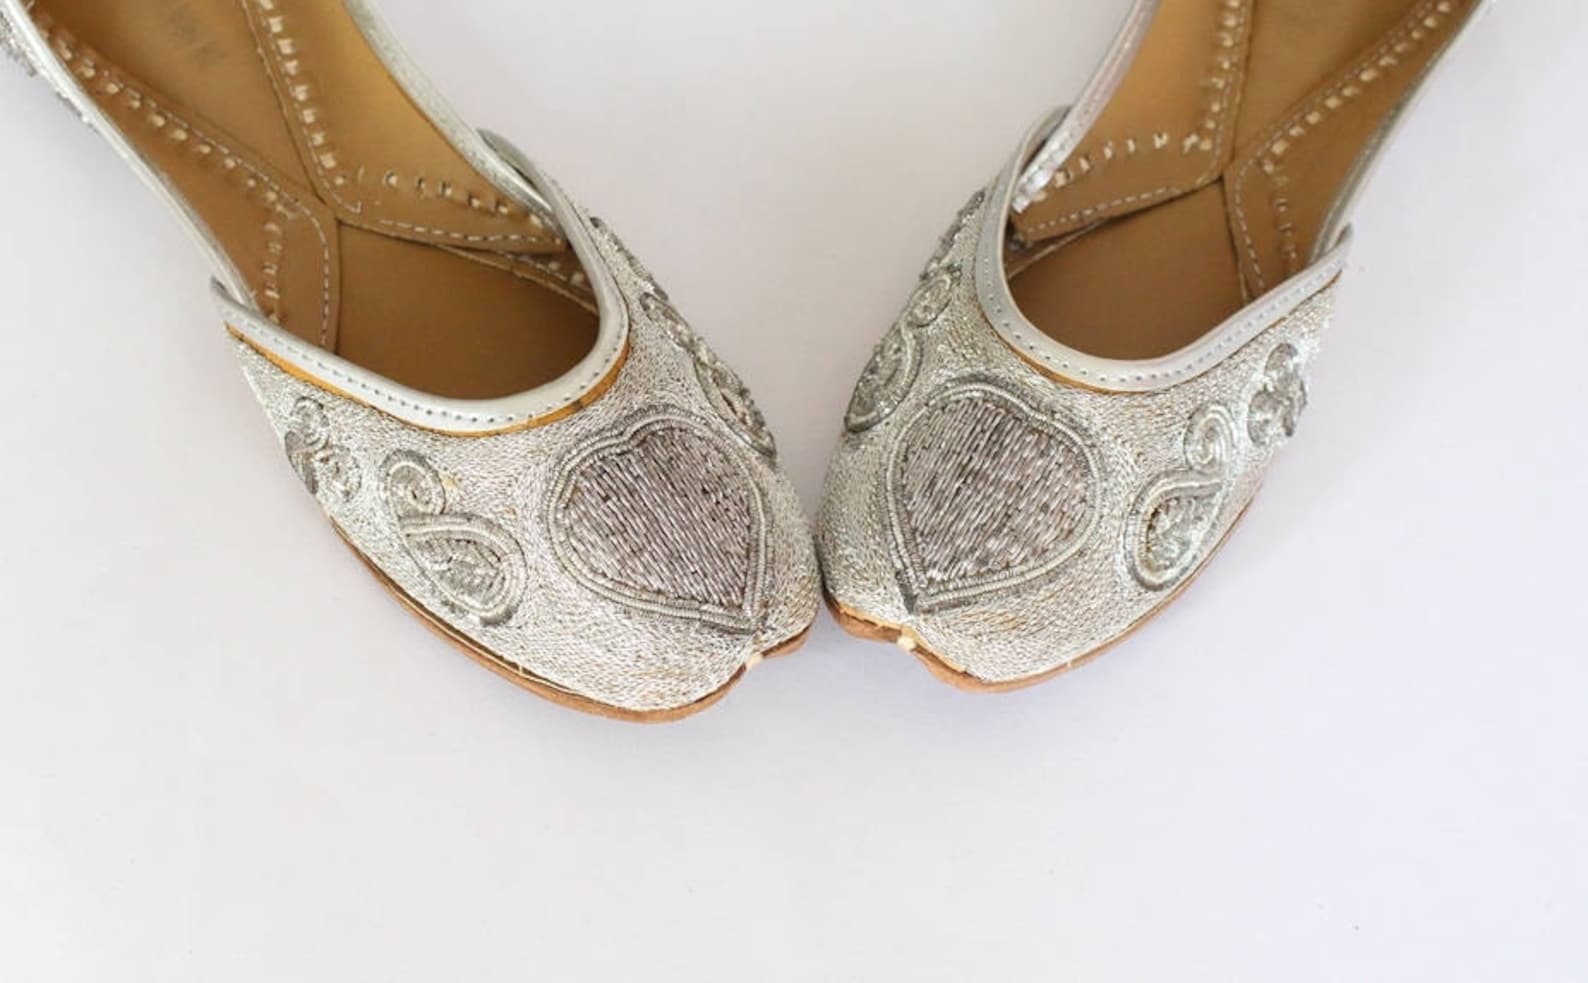 women bridal wedding shoes size 4.5/indian silver jutti shoes/silver wedding flats/silver ballet flats/jasmine shoes/khussa shoe